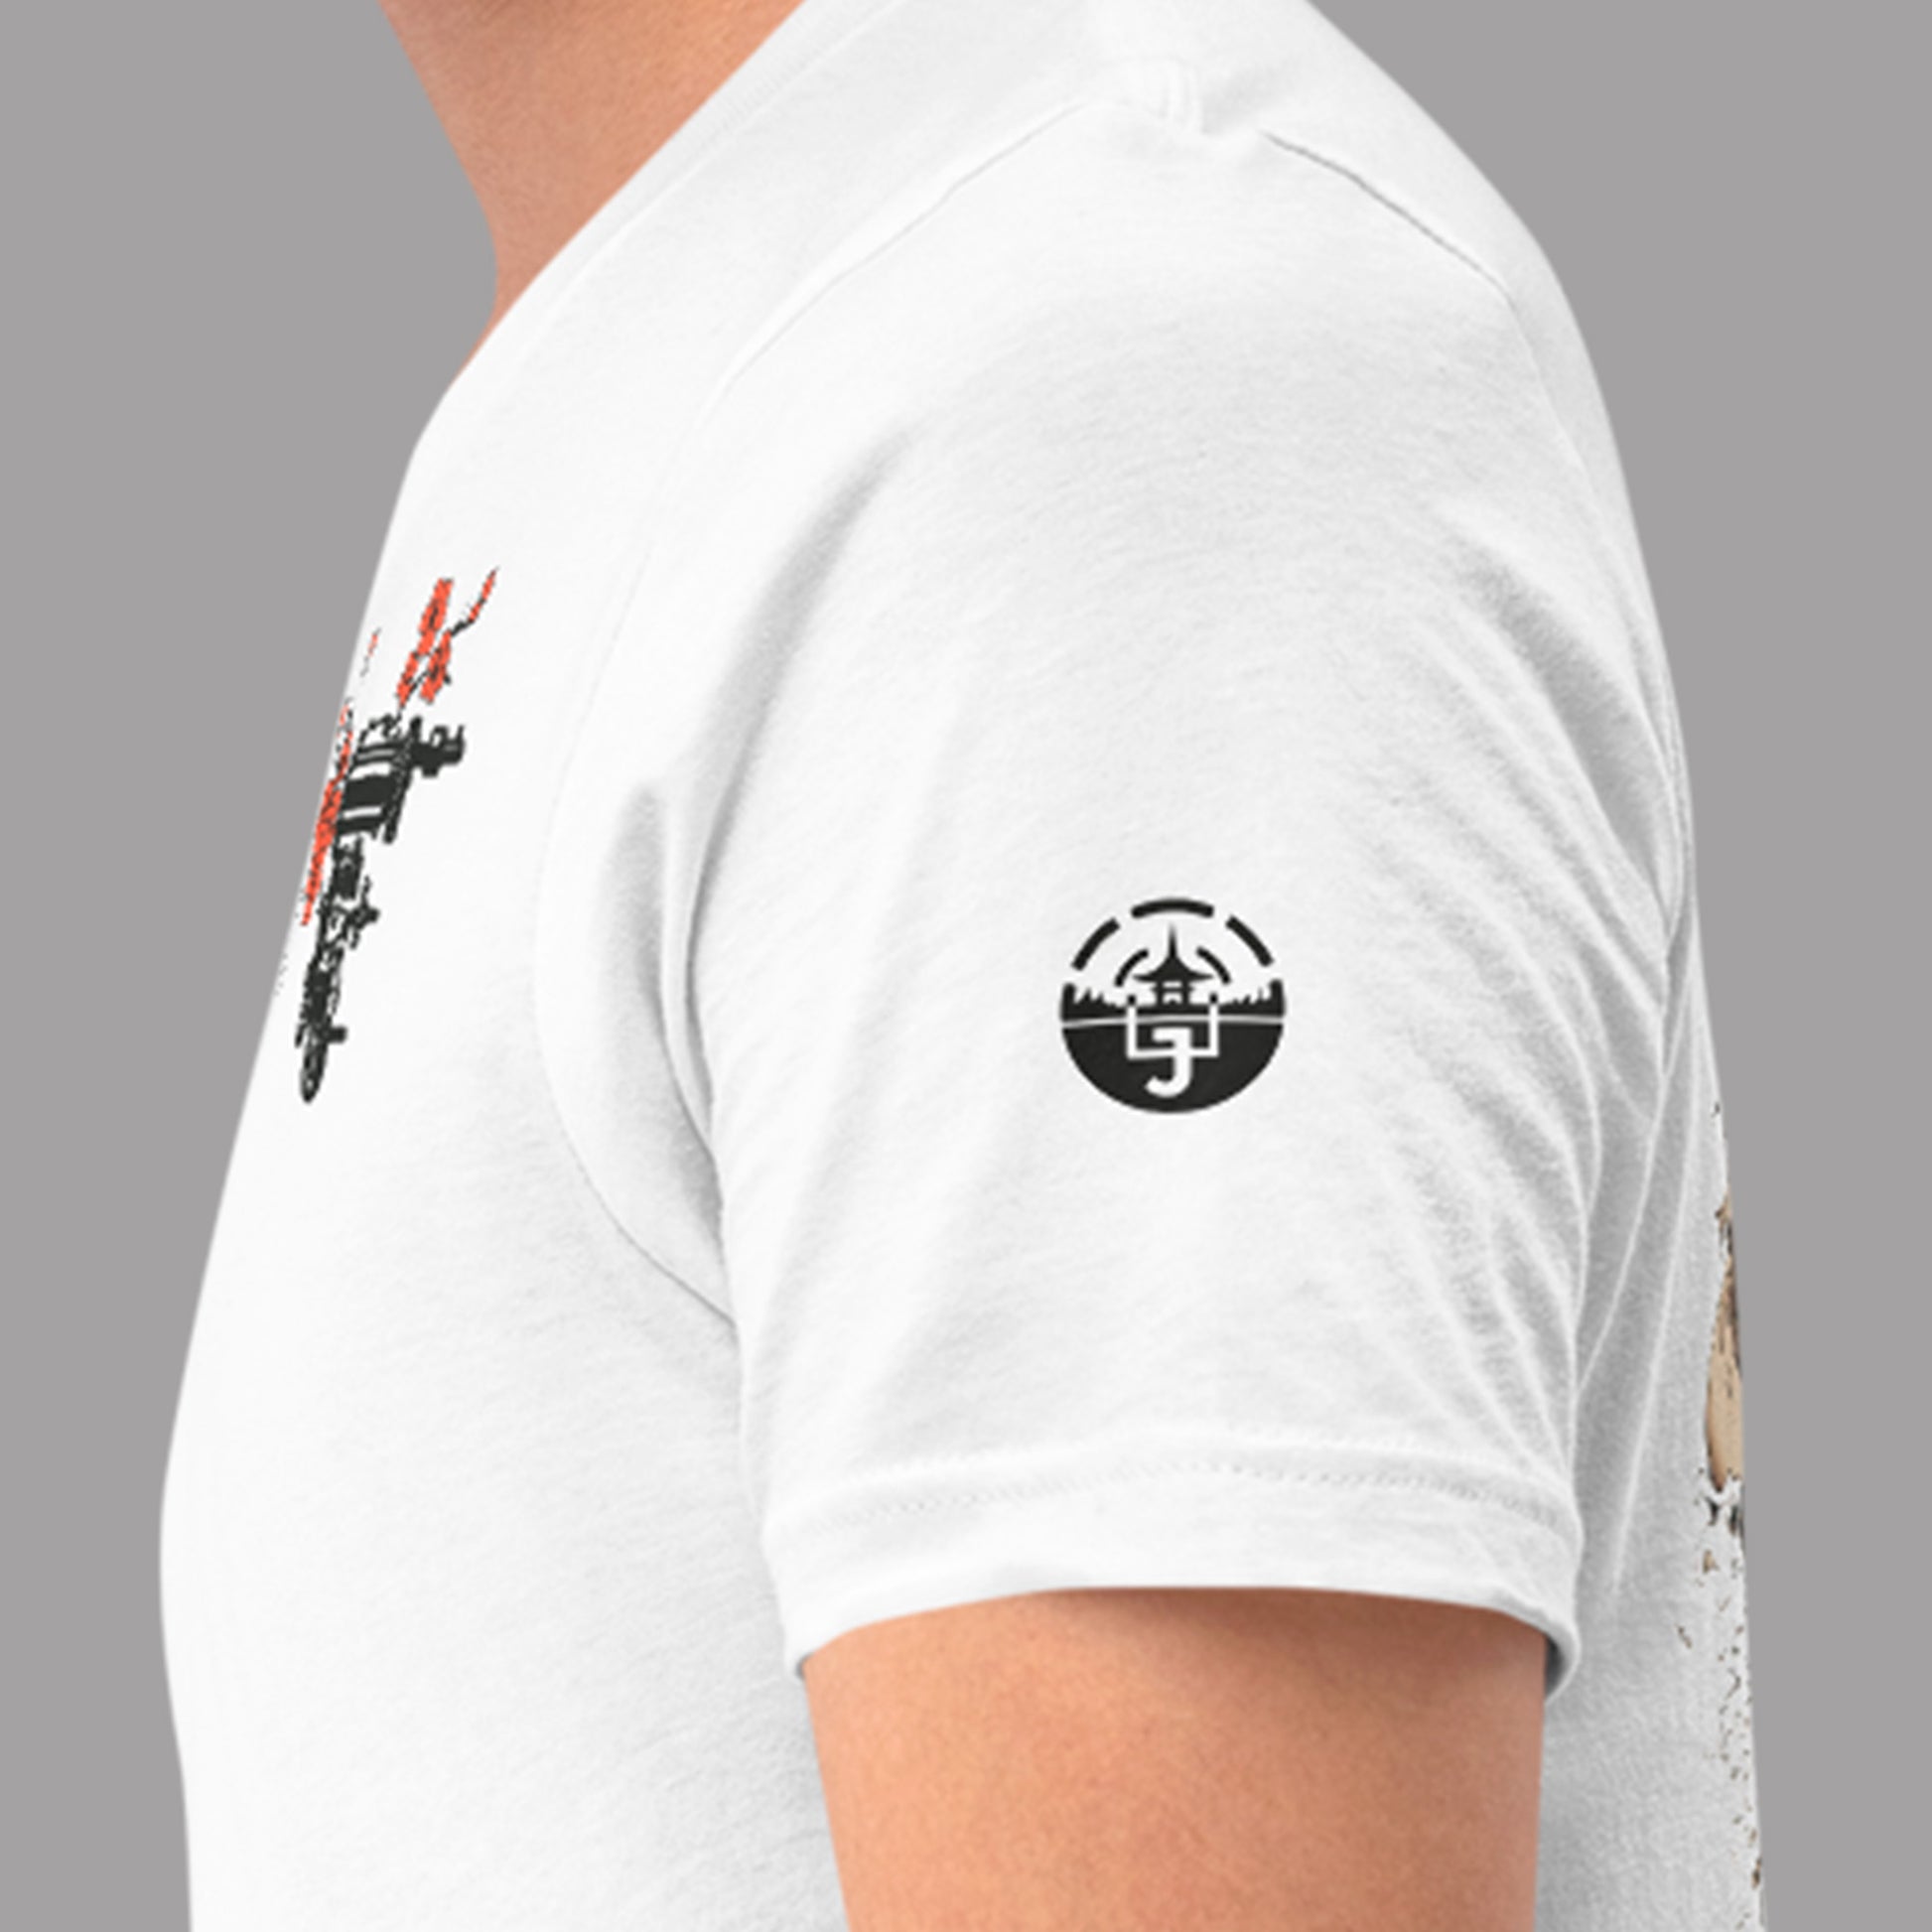 closeup of sleeve logo on white Shogun Unisex t-shirt